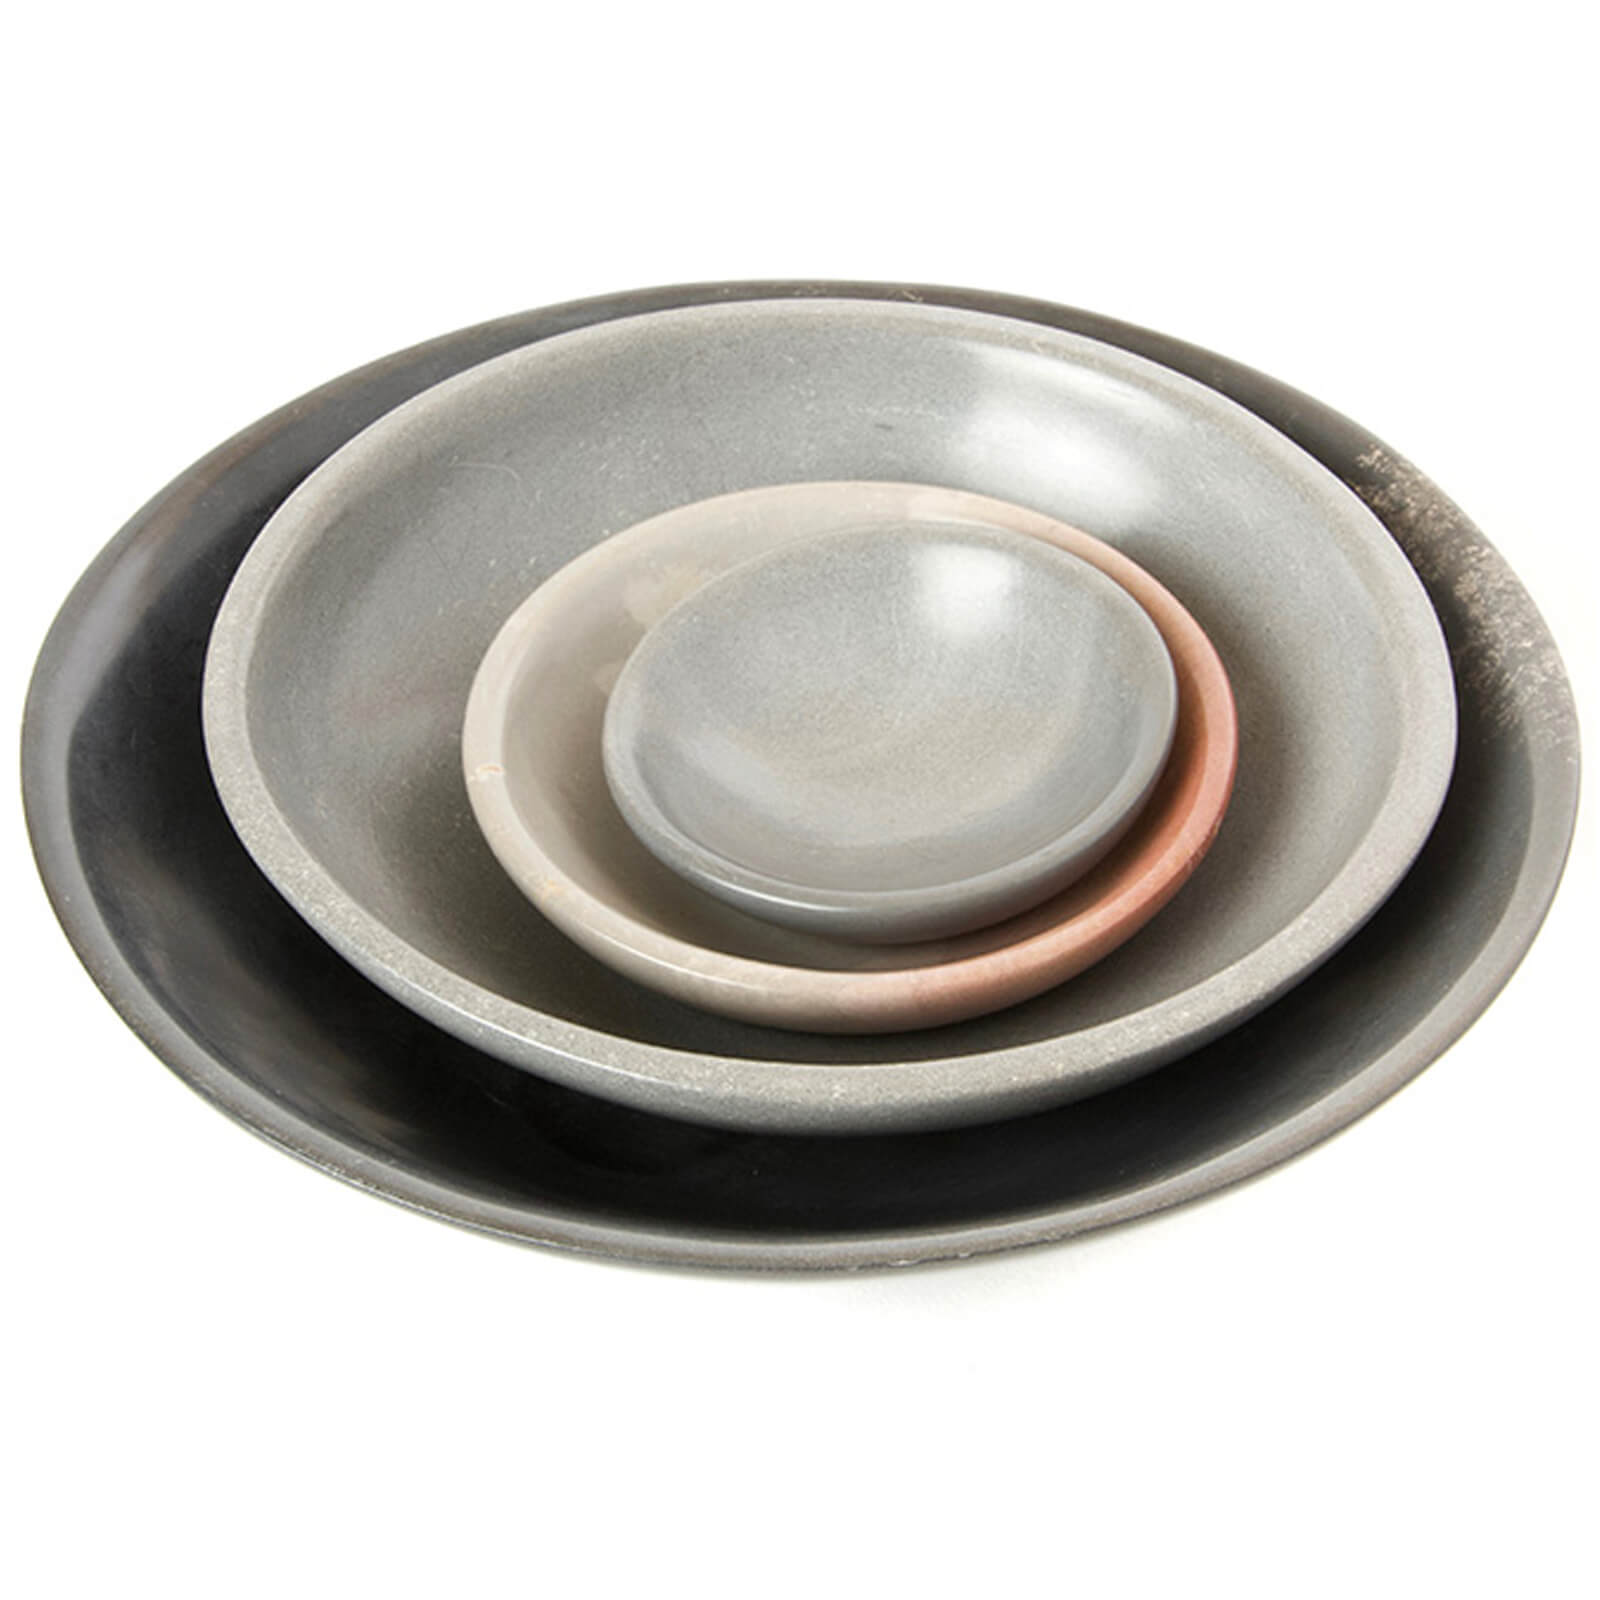 Medium Soapstone Serving Bowl - Grey